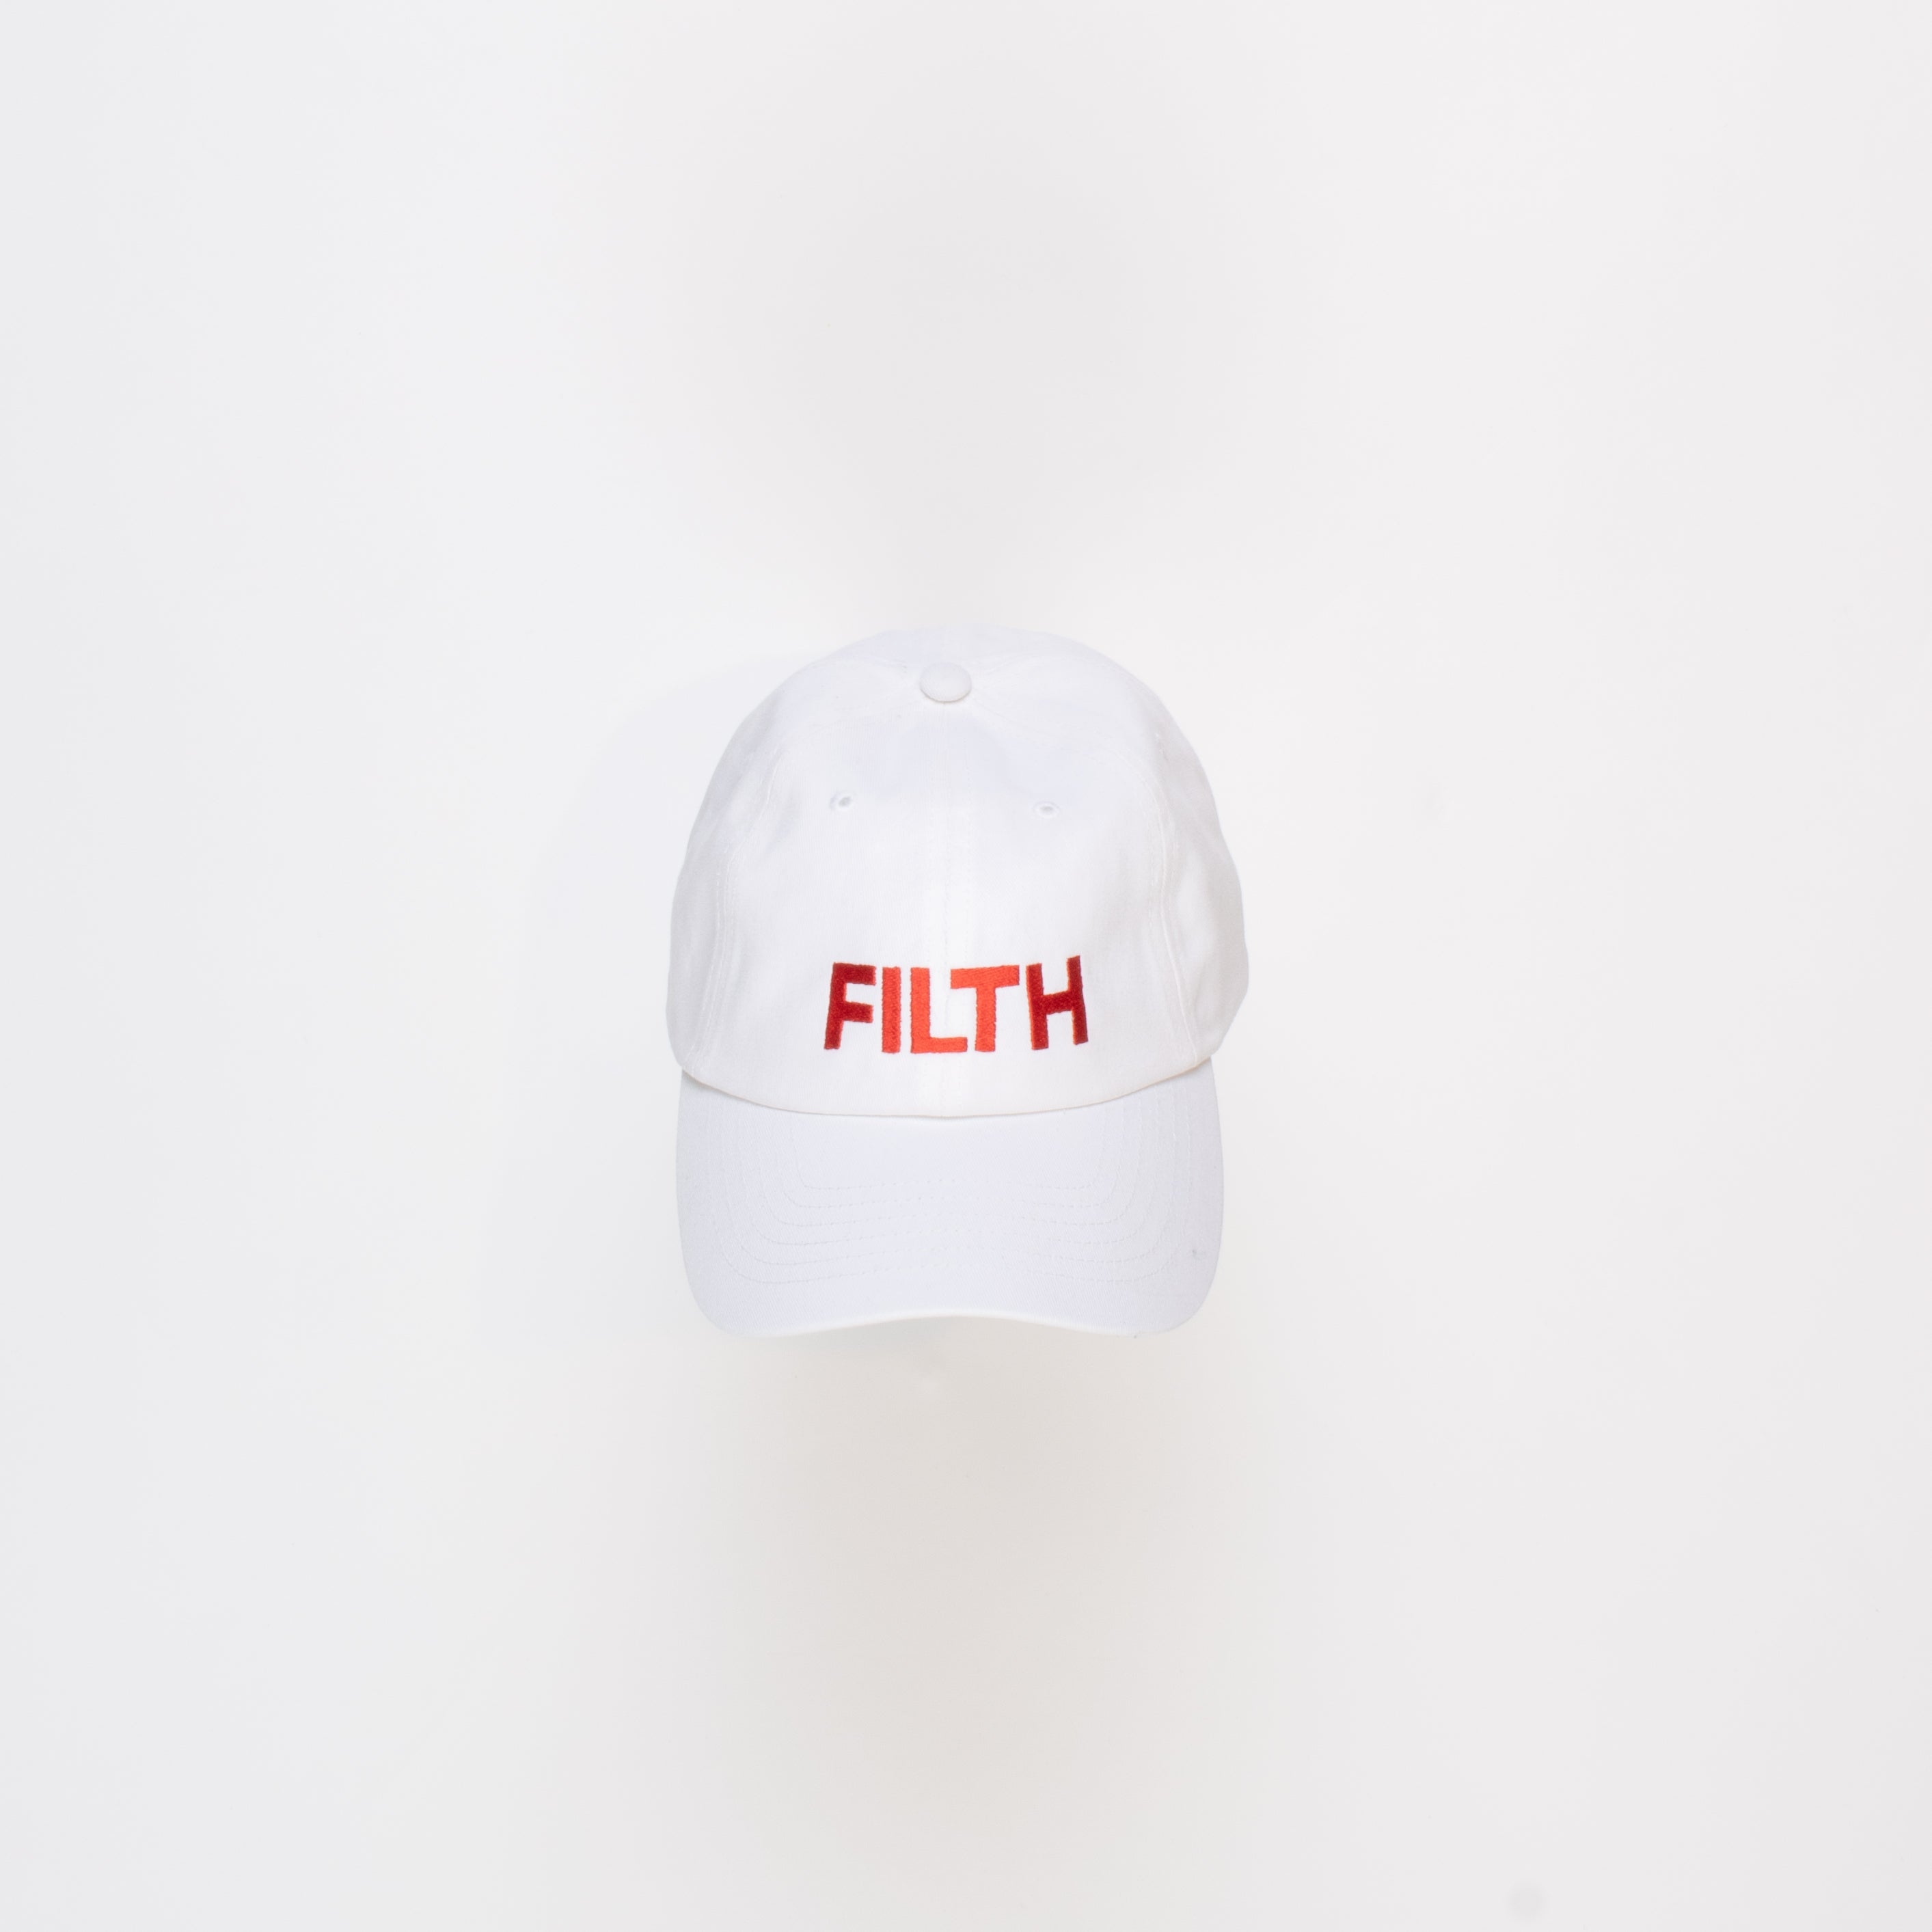 FILTH cap x 1